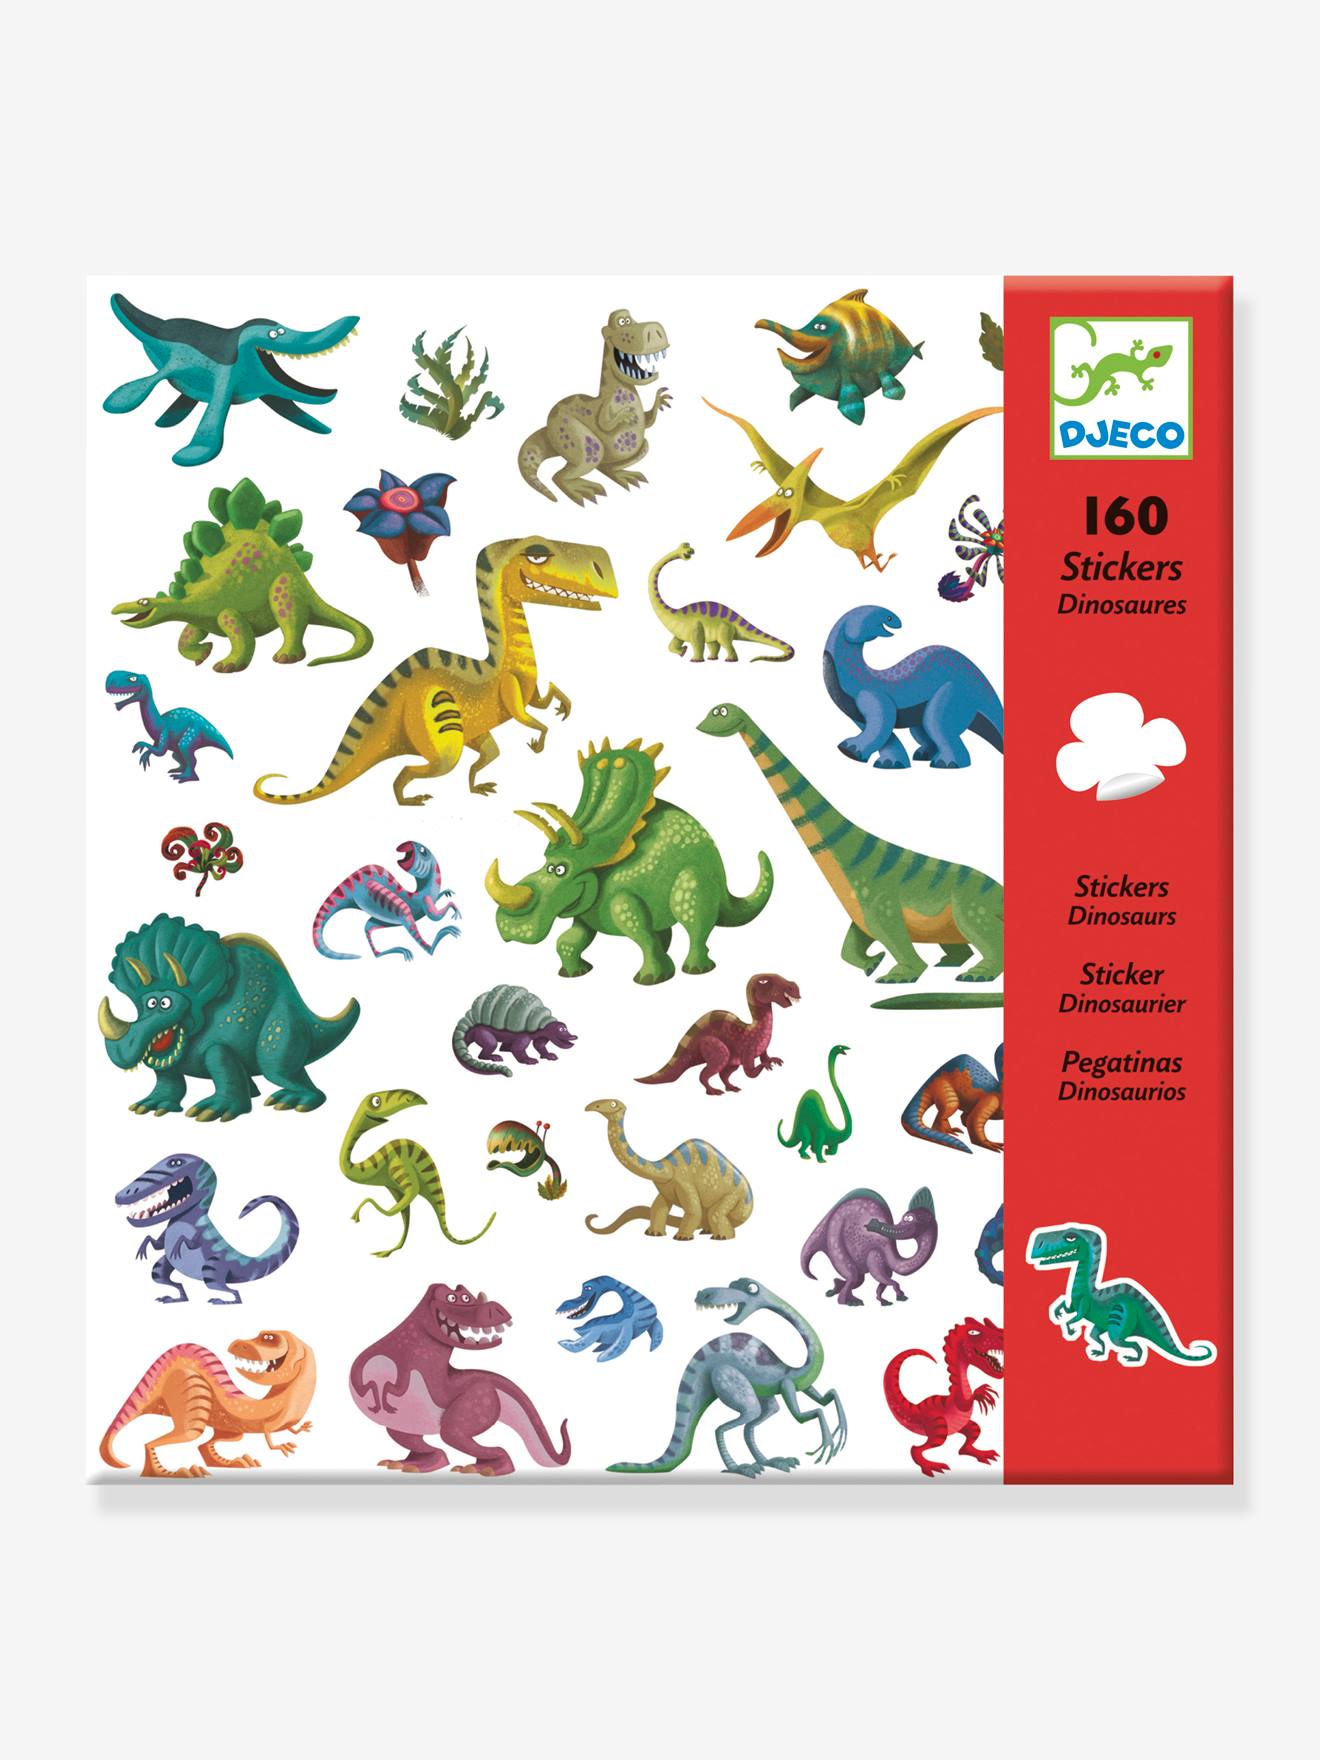 160 Dinosaur Stickers by DJECO green